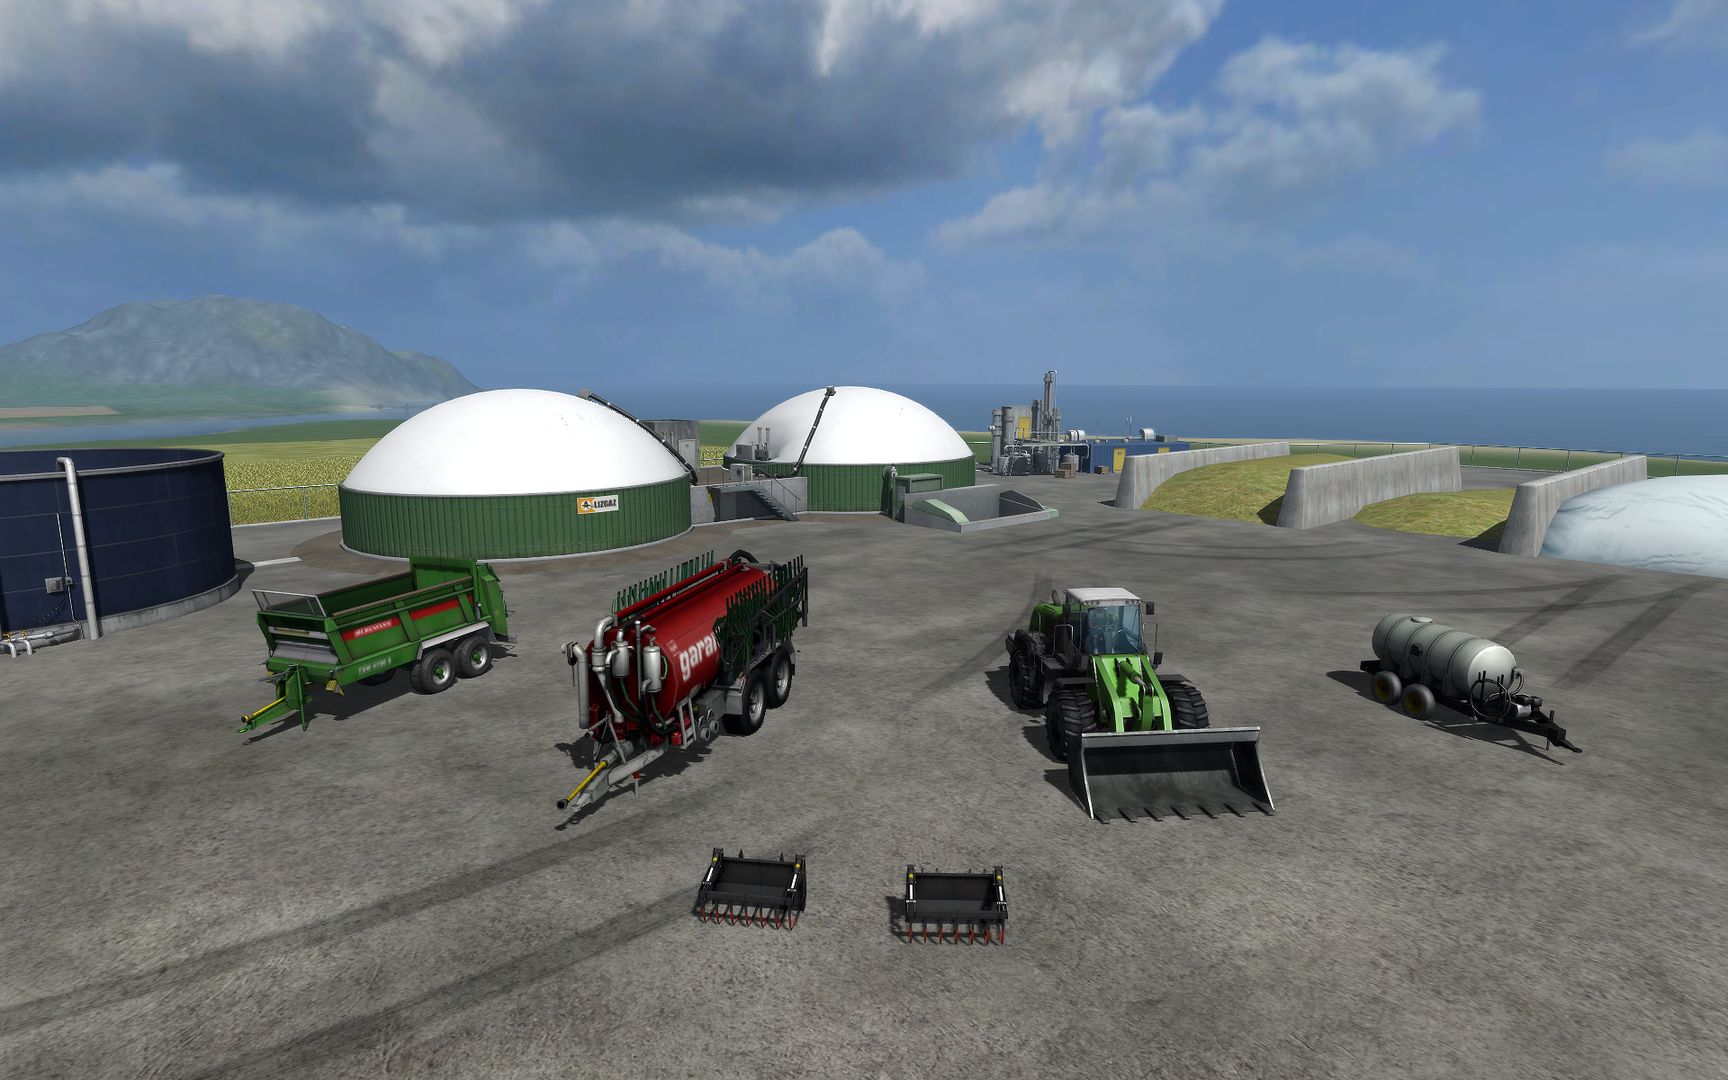 Farming Simulator 2011 - Equipment Pack 2 DLC Steam CD Key